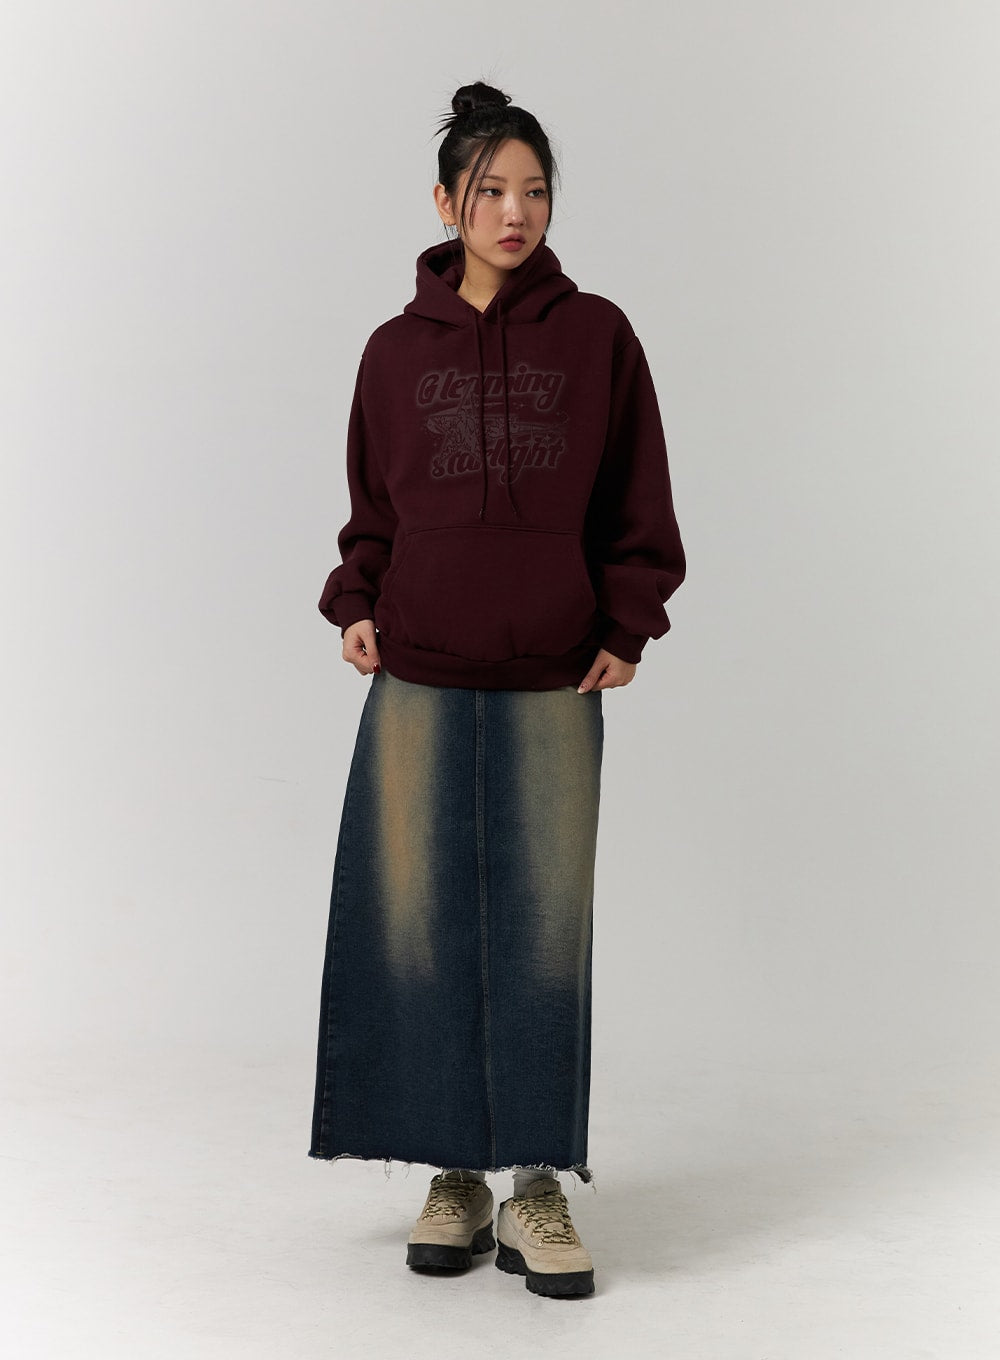 Best denim maxi skirts 2023: 10 long denim skirts to buy now